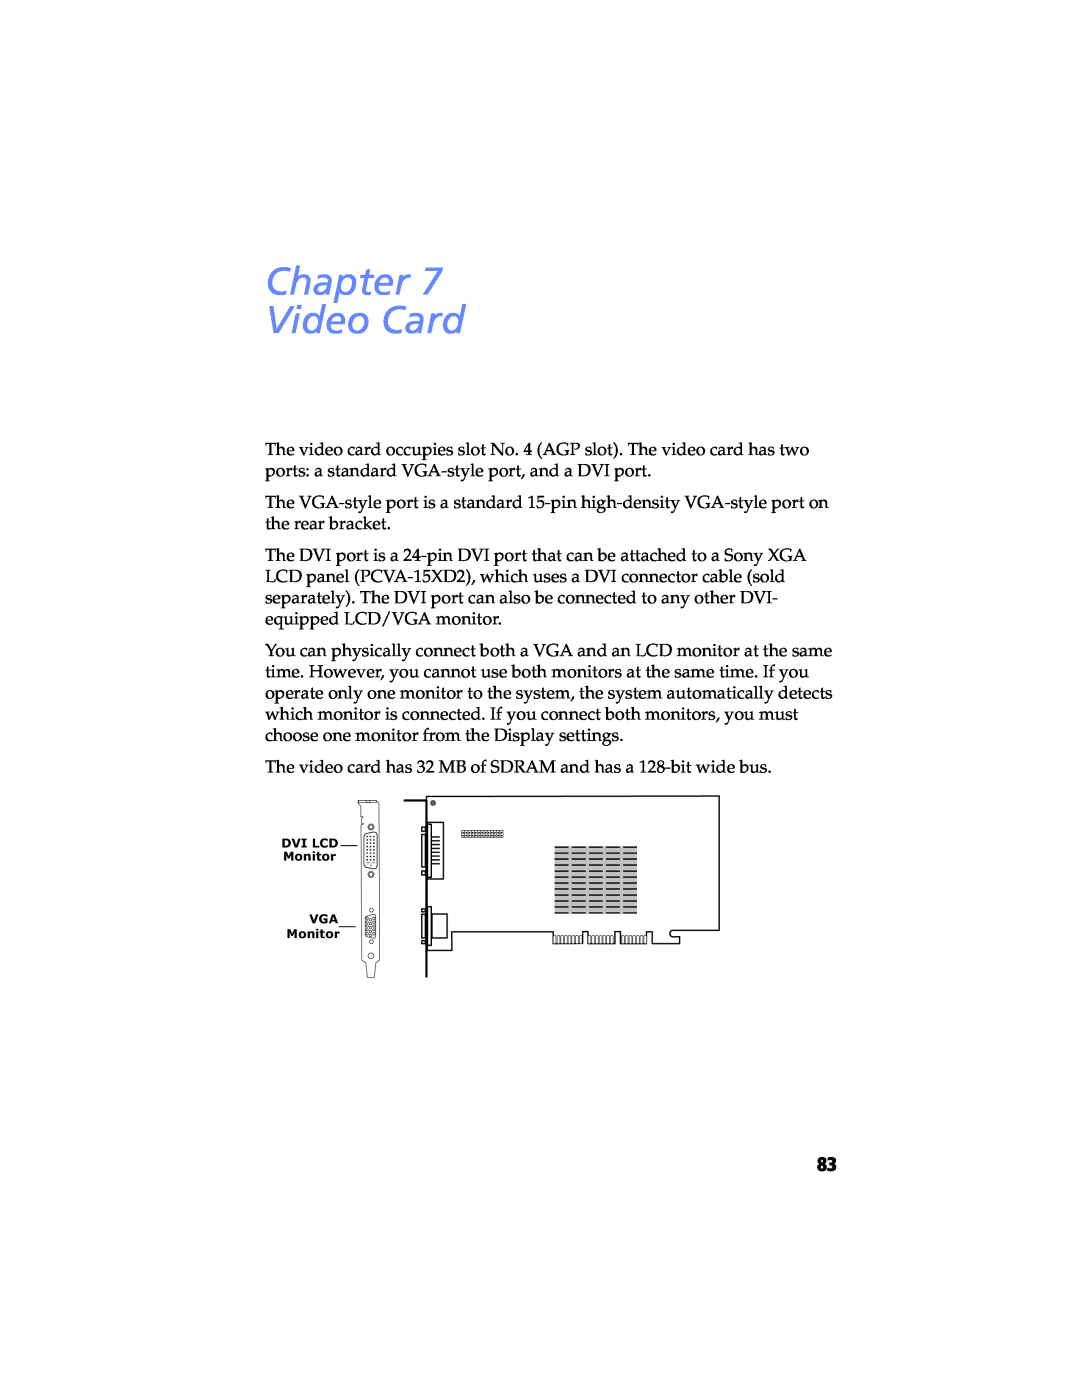 Sony PCV-RX490TV, PCV-RX462DS, PCV-RX470DS, PCV-RX480DS, PCV-RX463DS manual Chapter Video Card, DVI LCD Monitor VGA Monitor 